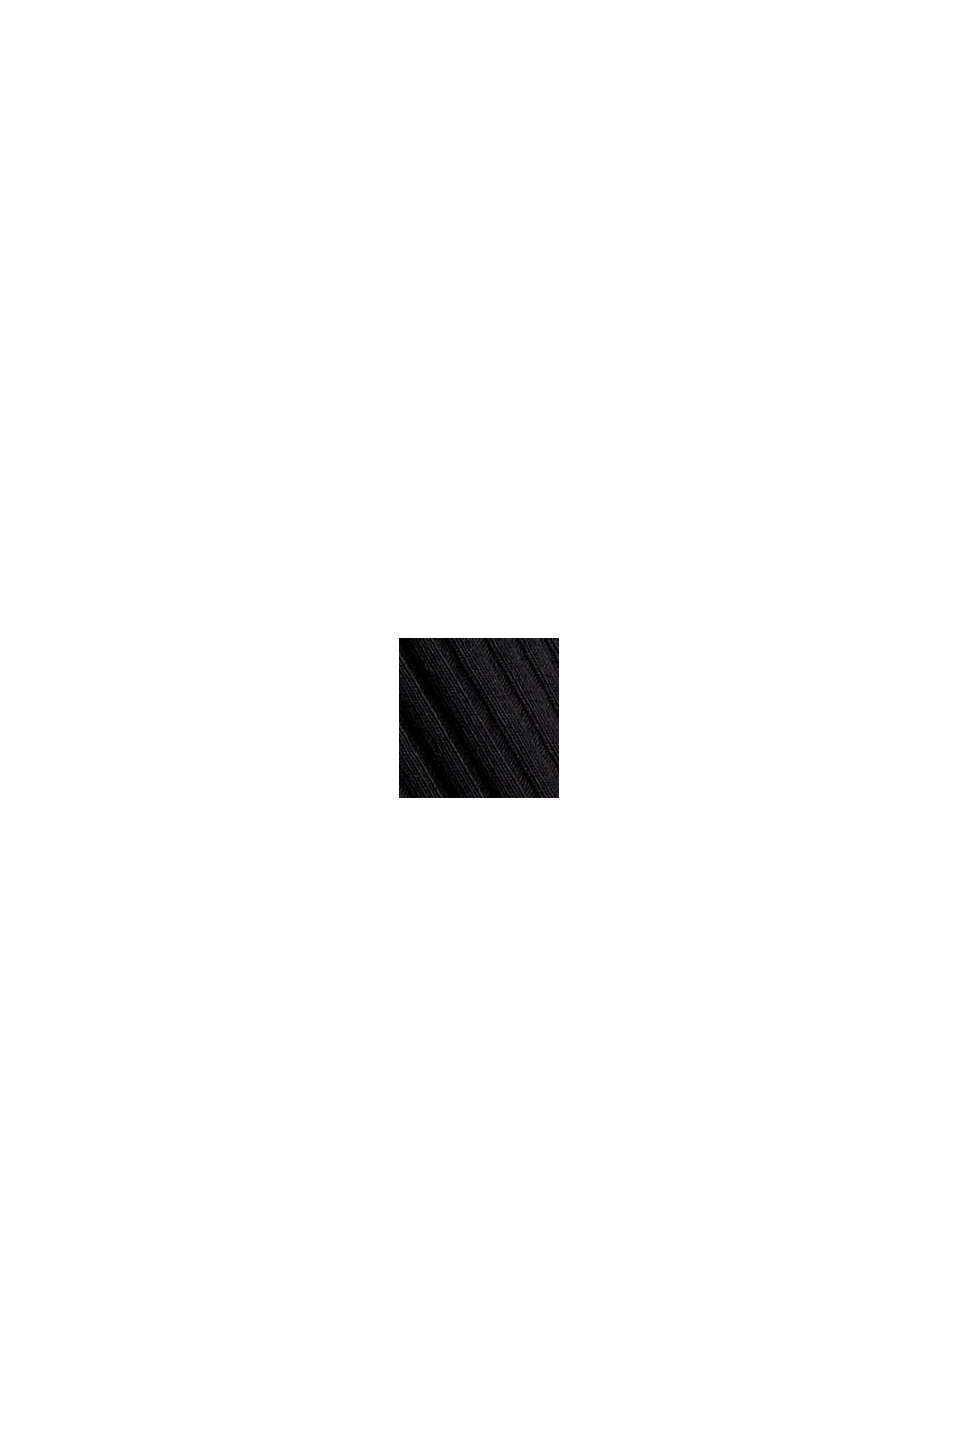 Ribgebreide jurk van katoenen jersey, BLACK, swatch